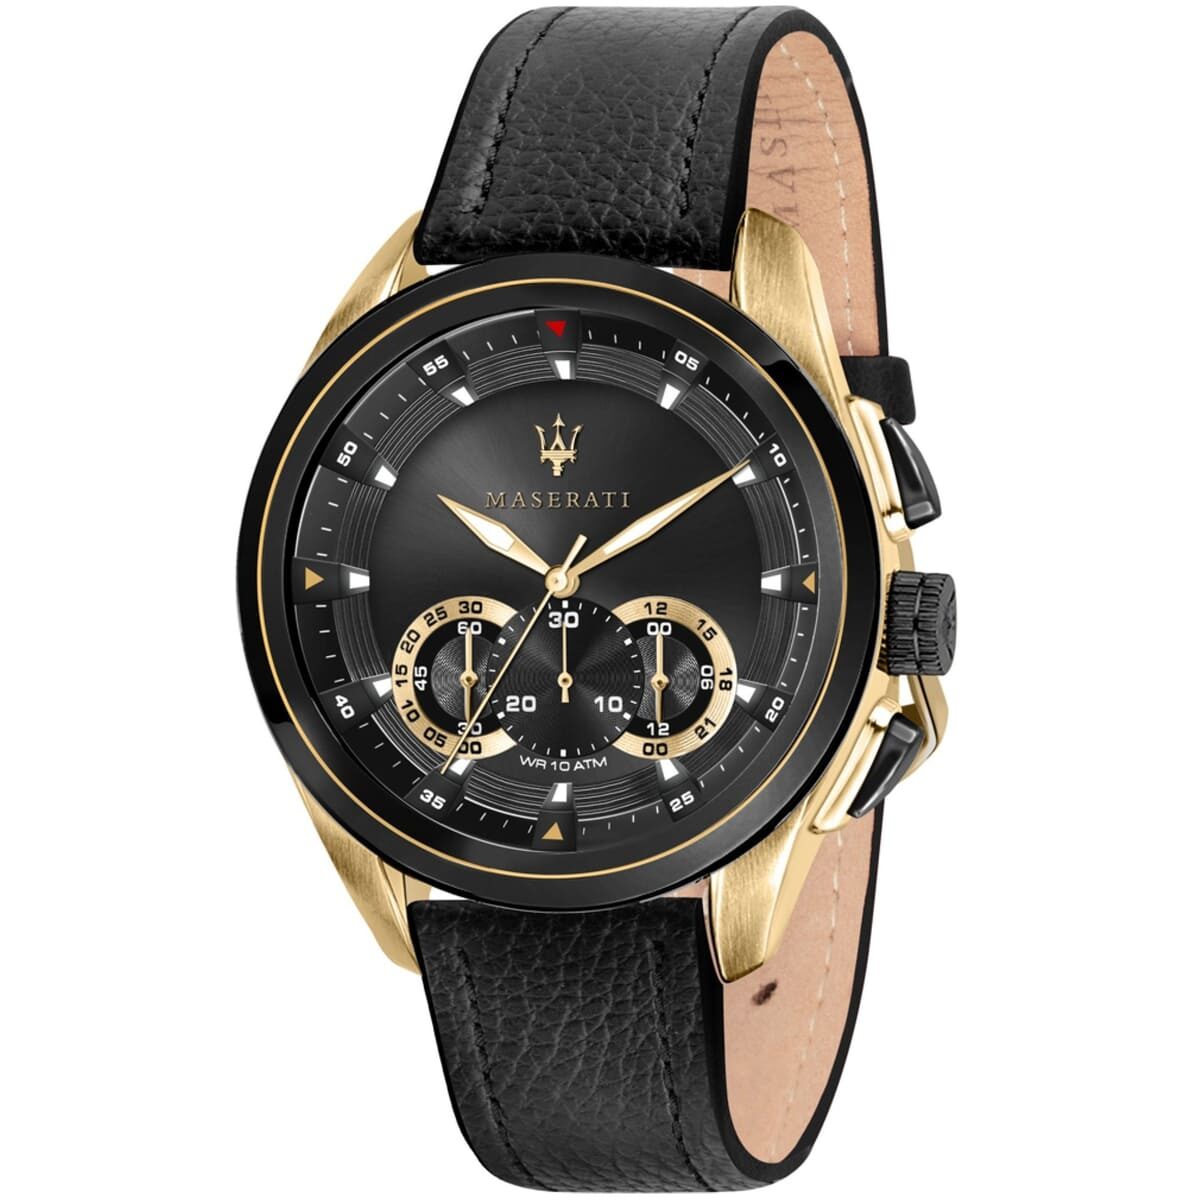 r8871612033-maserati-watch-men-black-dial-leather-strap-quartz-battery-analog-chronograph-wr-10-atm-traguardo